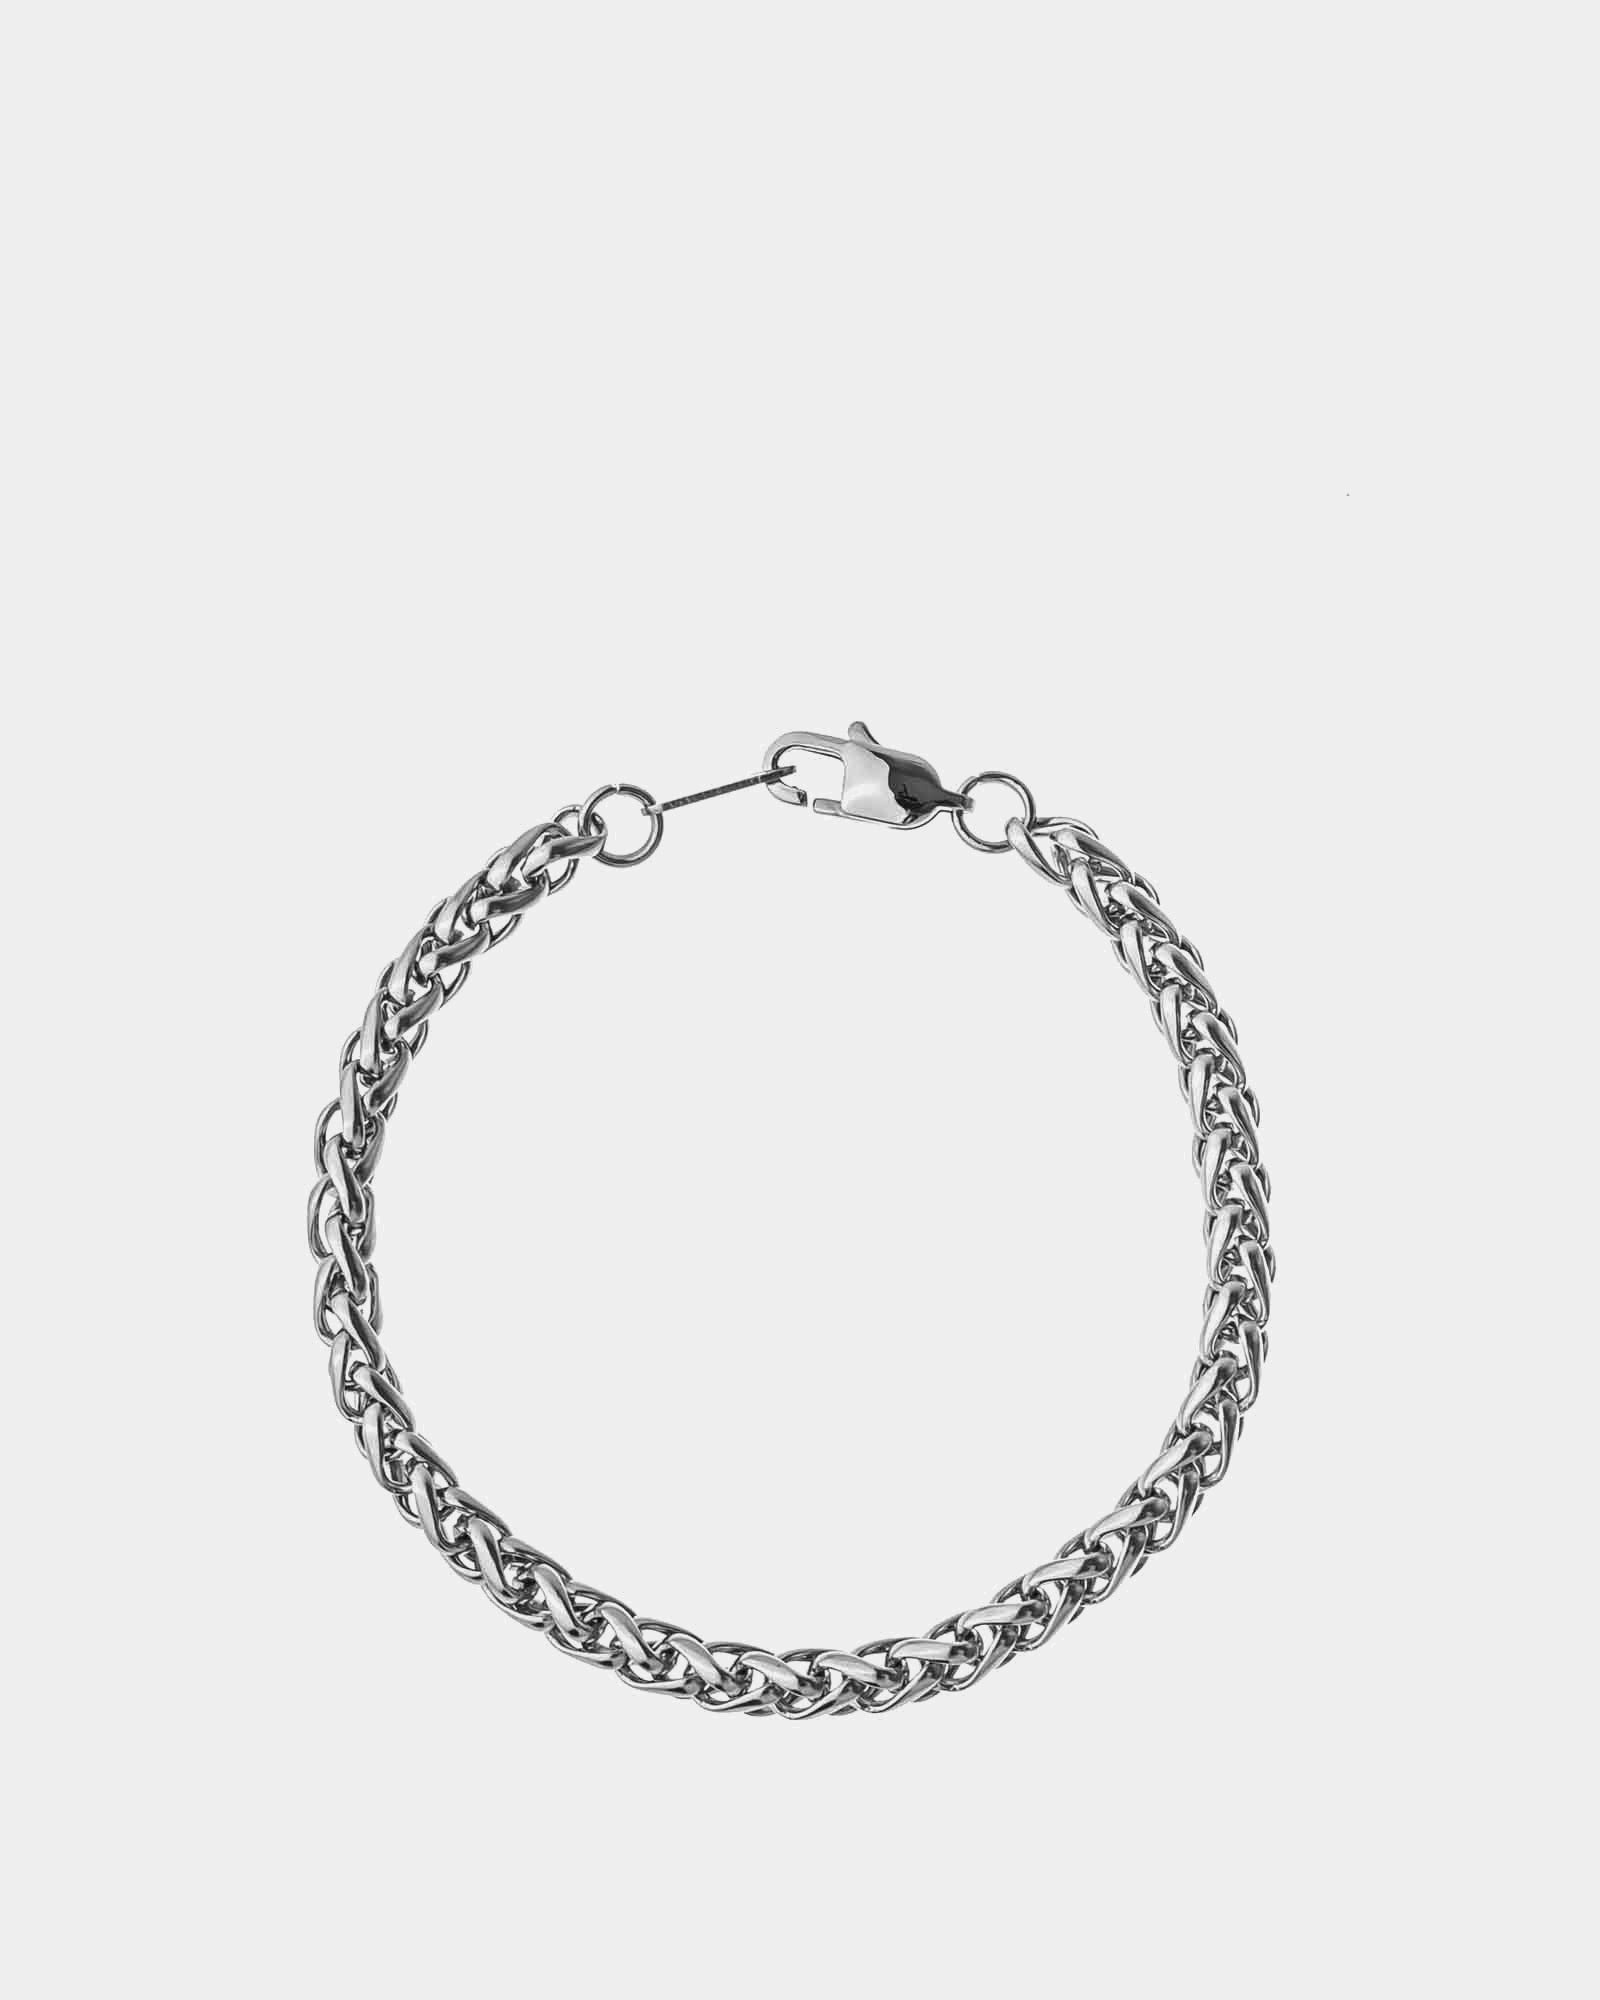 San Blas - Stainless Steel Bracelet 'San Blas' - MenWomen Bracelet - Online Unissex Jewelry - Dicci